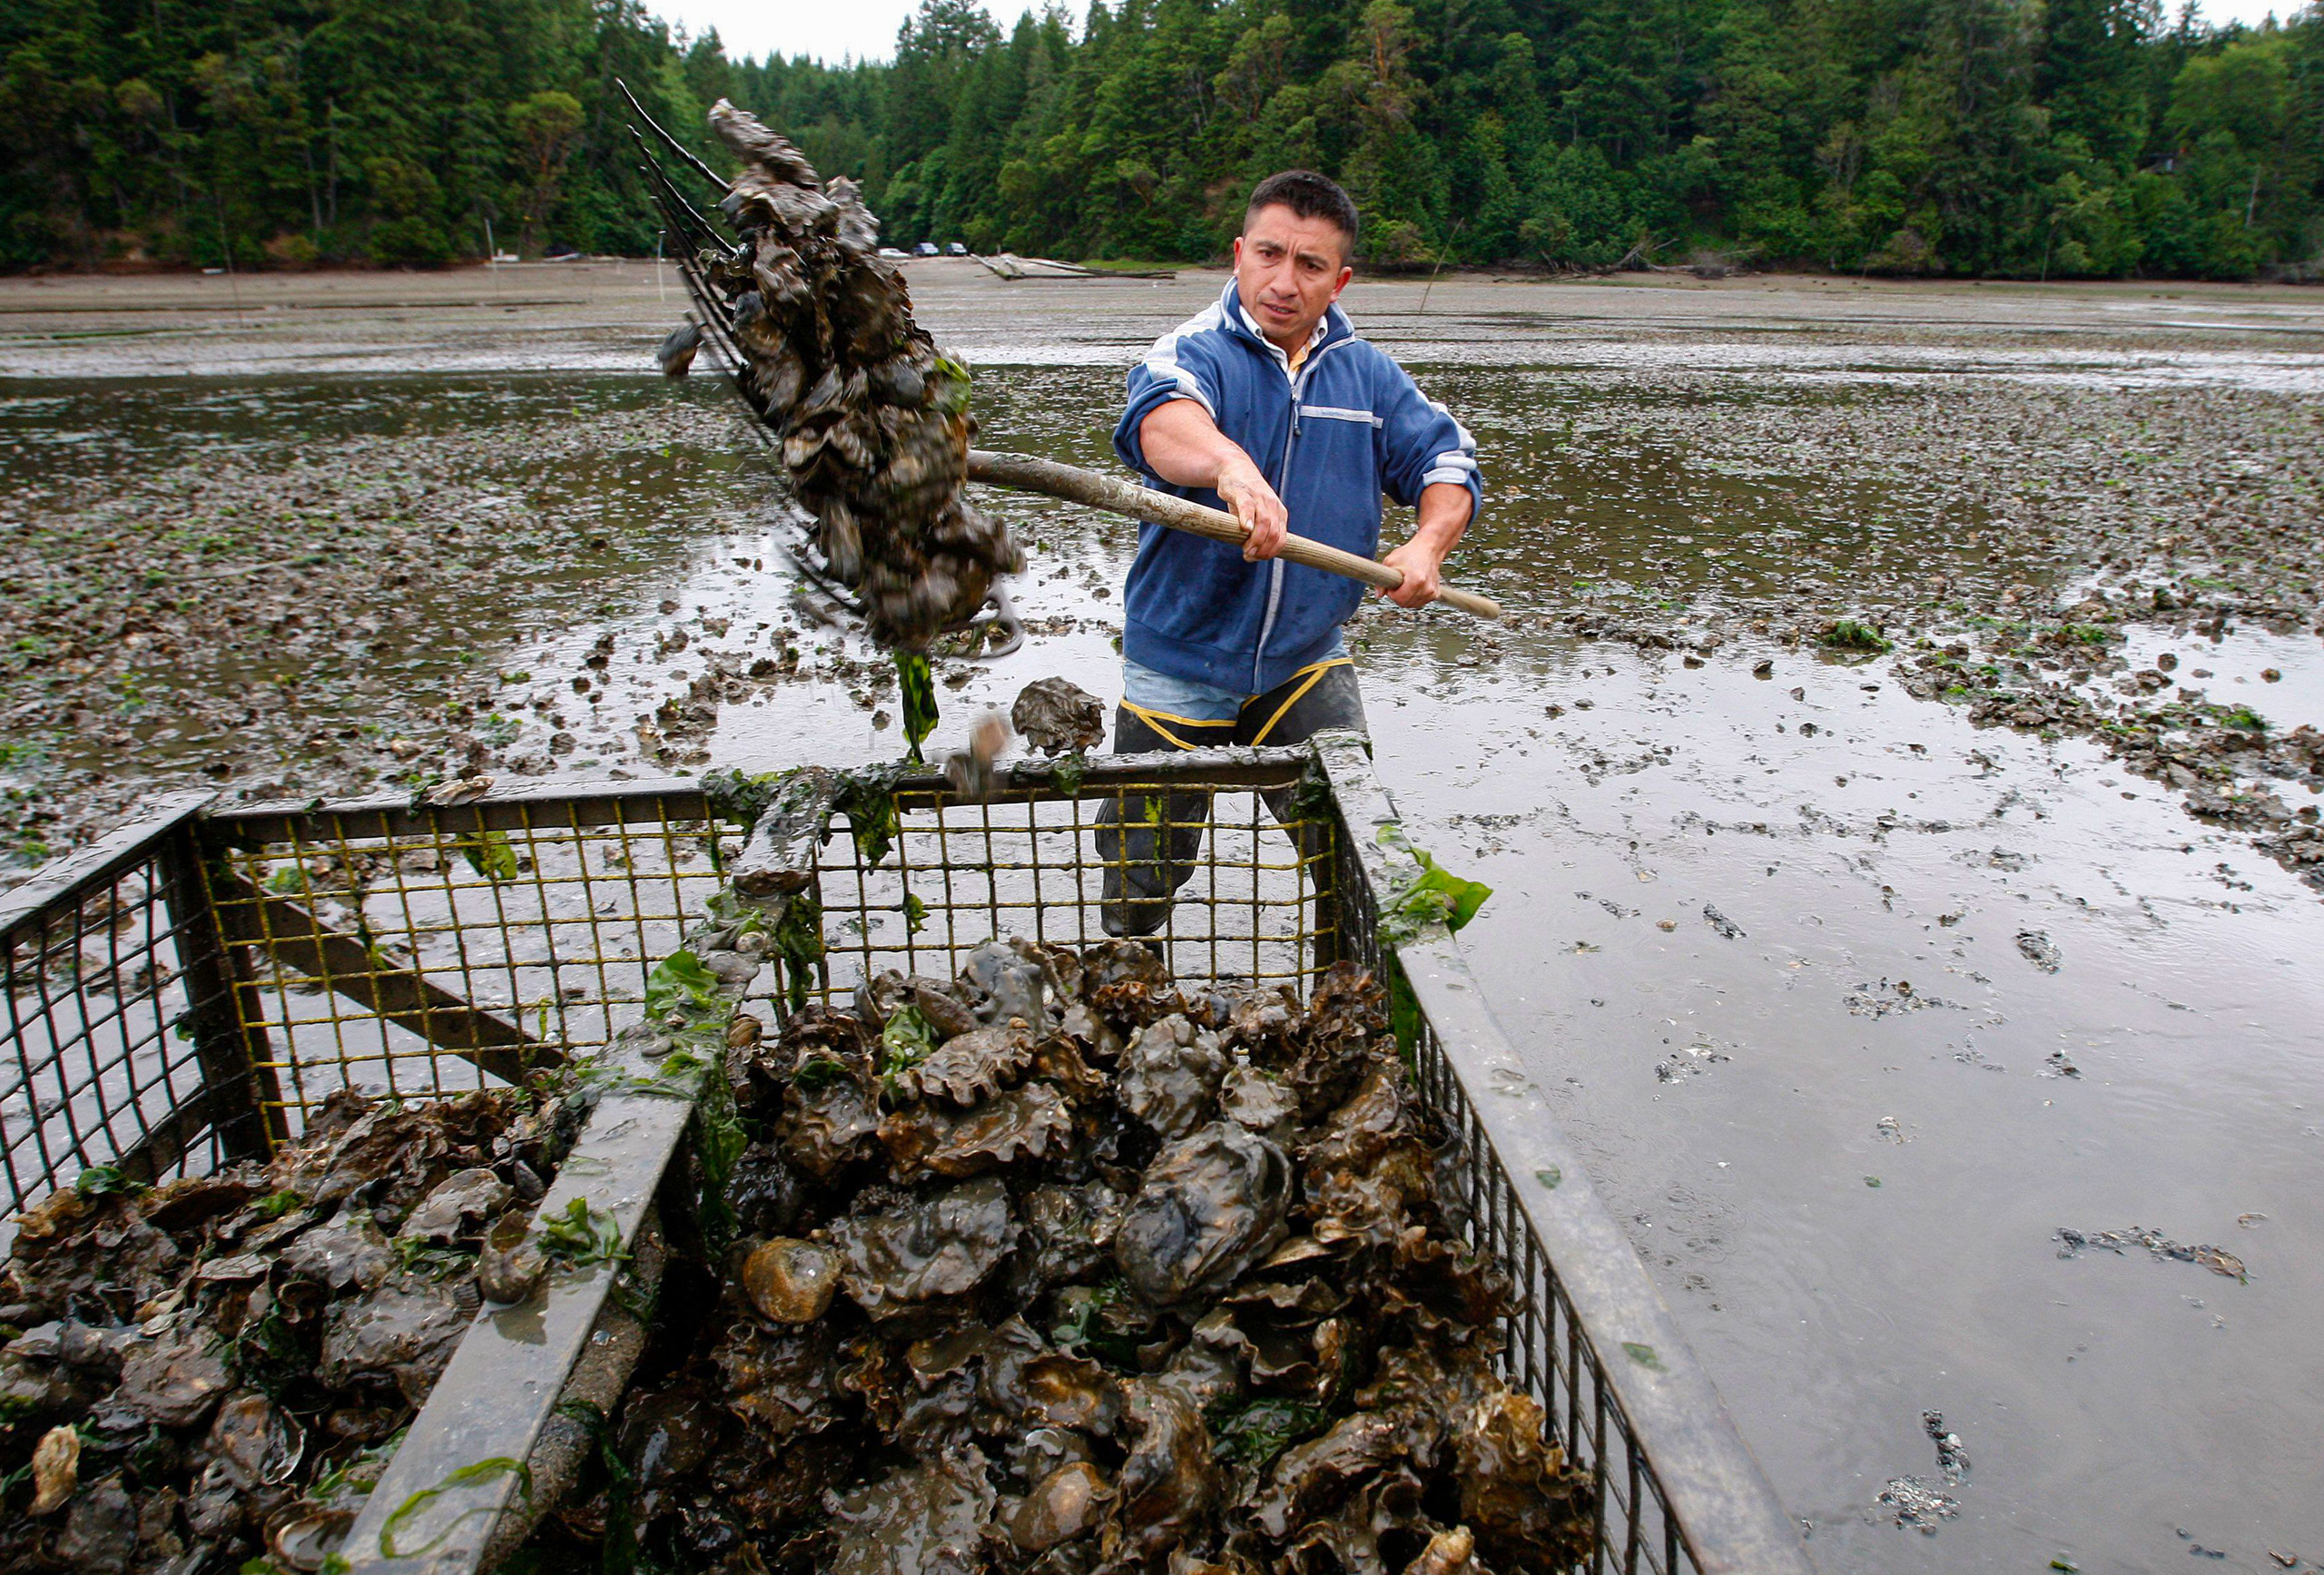 <p>华盛顿州牡蛎湾，泰勒贝类养殖场（Taylor Shellfish Farms）的一名工人正在收获牡蛎。和美国太平洋沿岸其他养殖户一样，泰勒贝类养殖场也受到2007年海洋酸度飙升的严重影响，目前他们正在和研究人员合作开展监测和减缓工作。图片来源：Ted S Warren / Alamy</p>